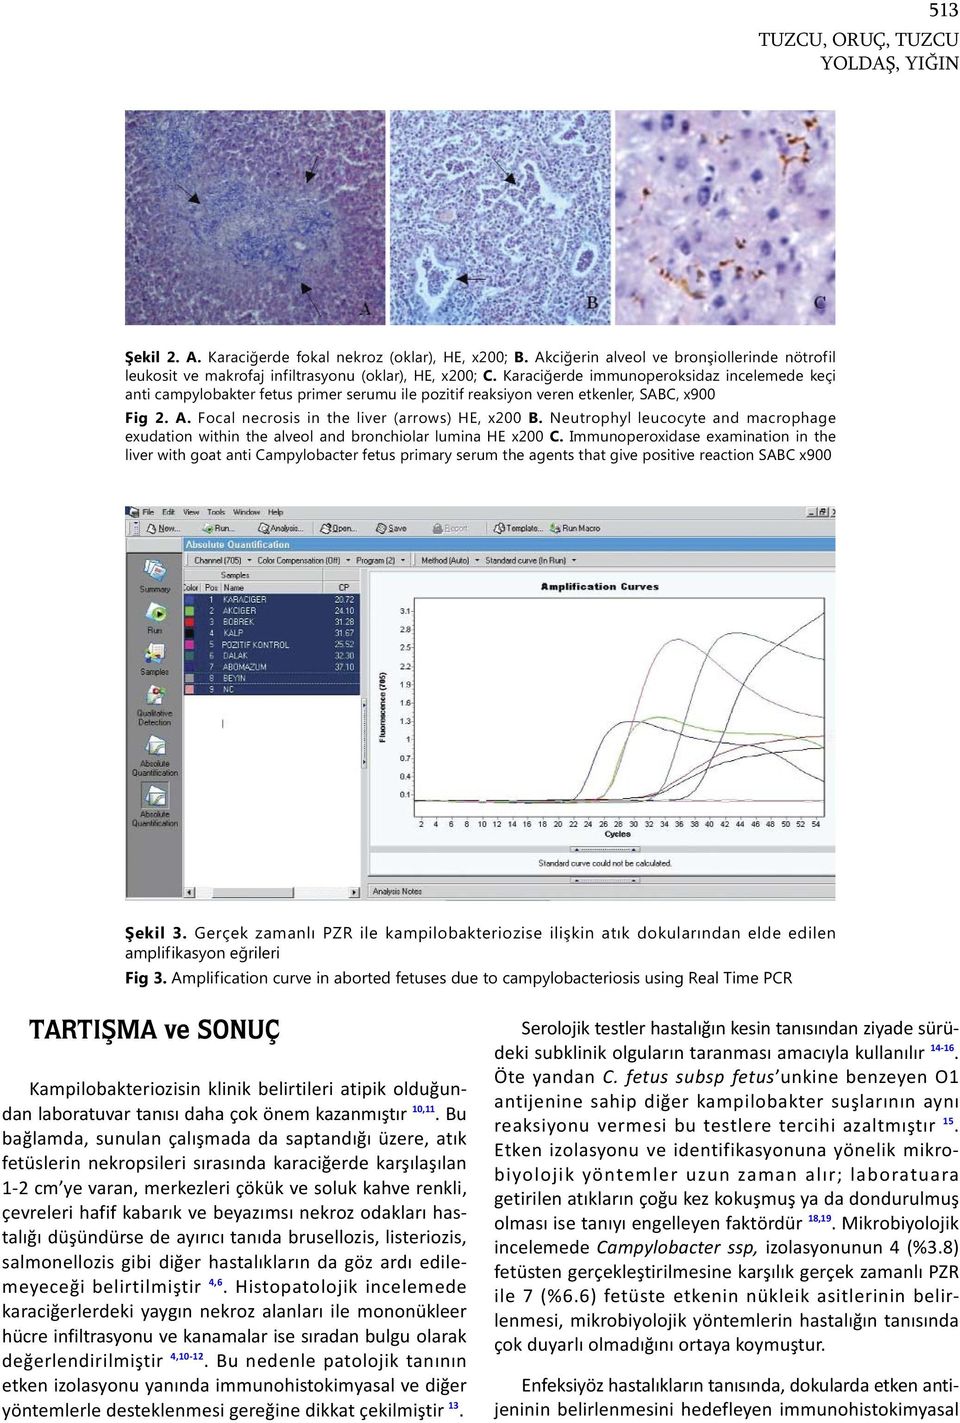 Neutrophyl leucocyte and macrophage exudation within the alveol and bronchiolar lumina HE x200 C.